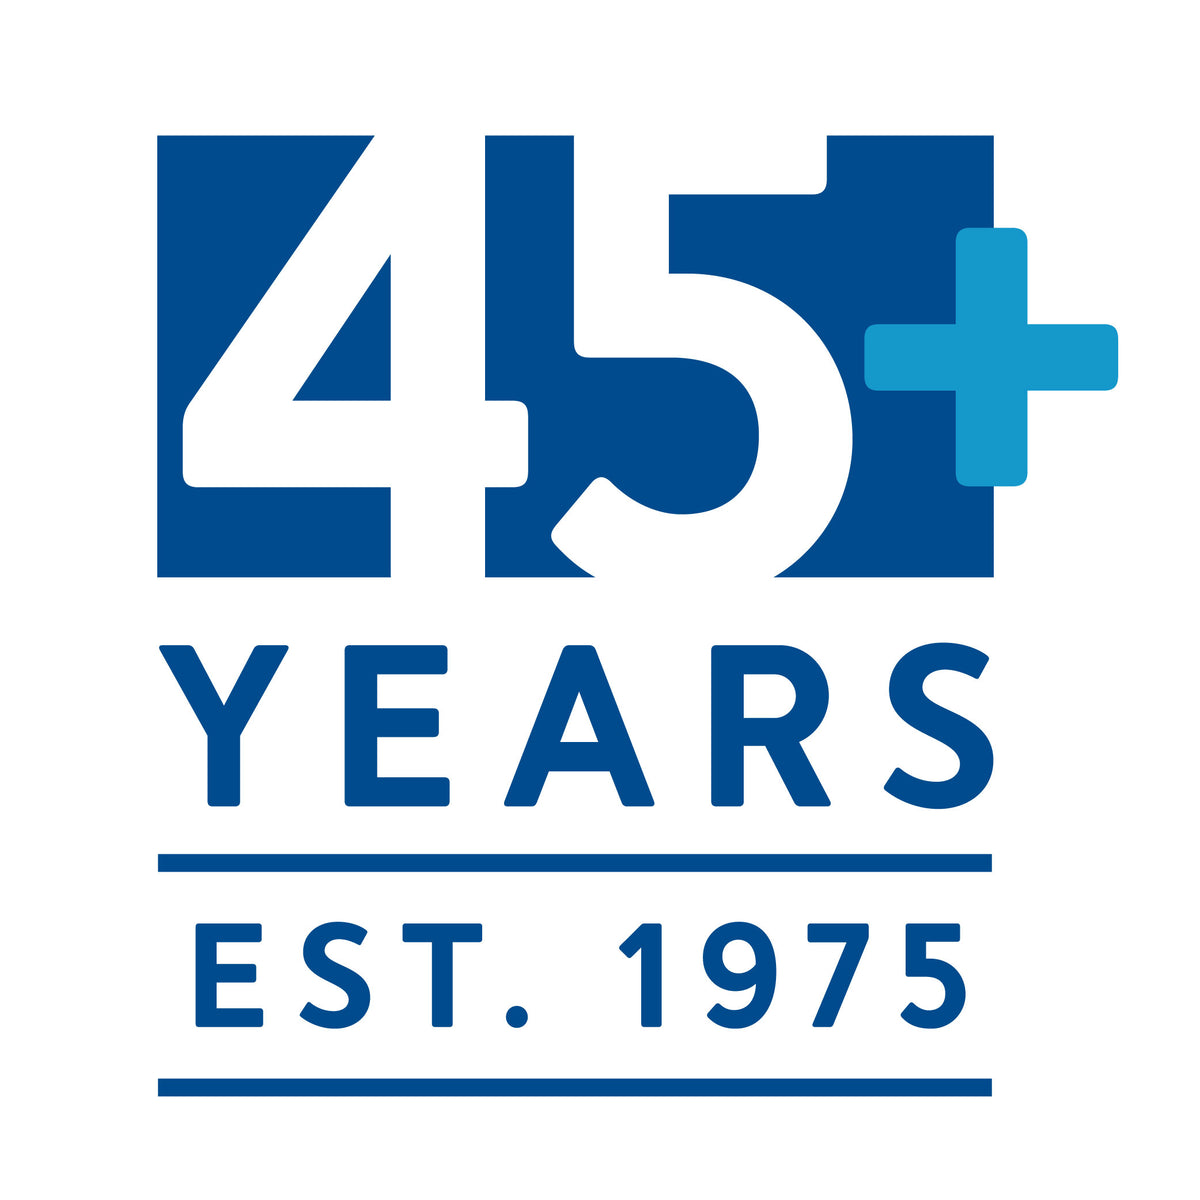 45 Plus Years - Established in 1975